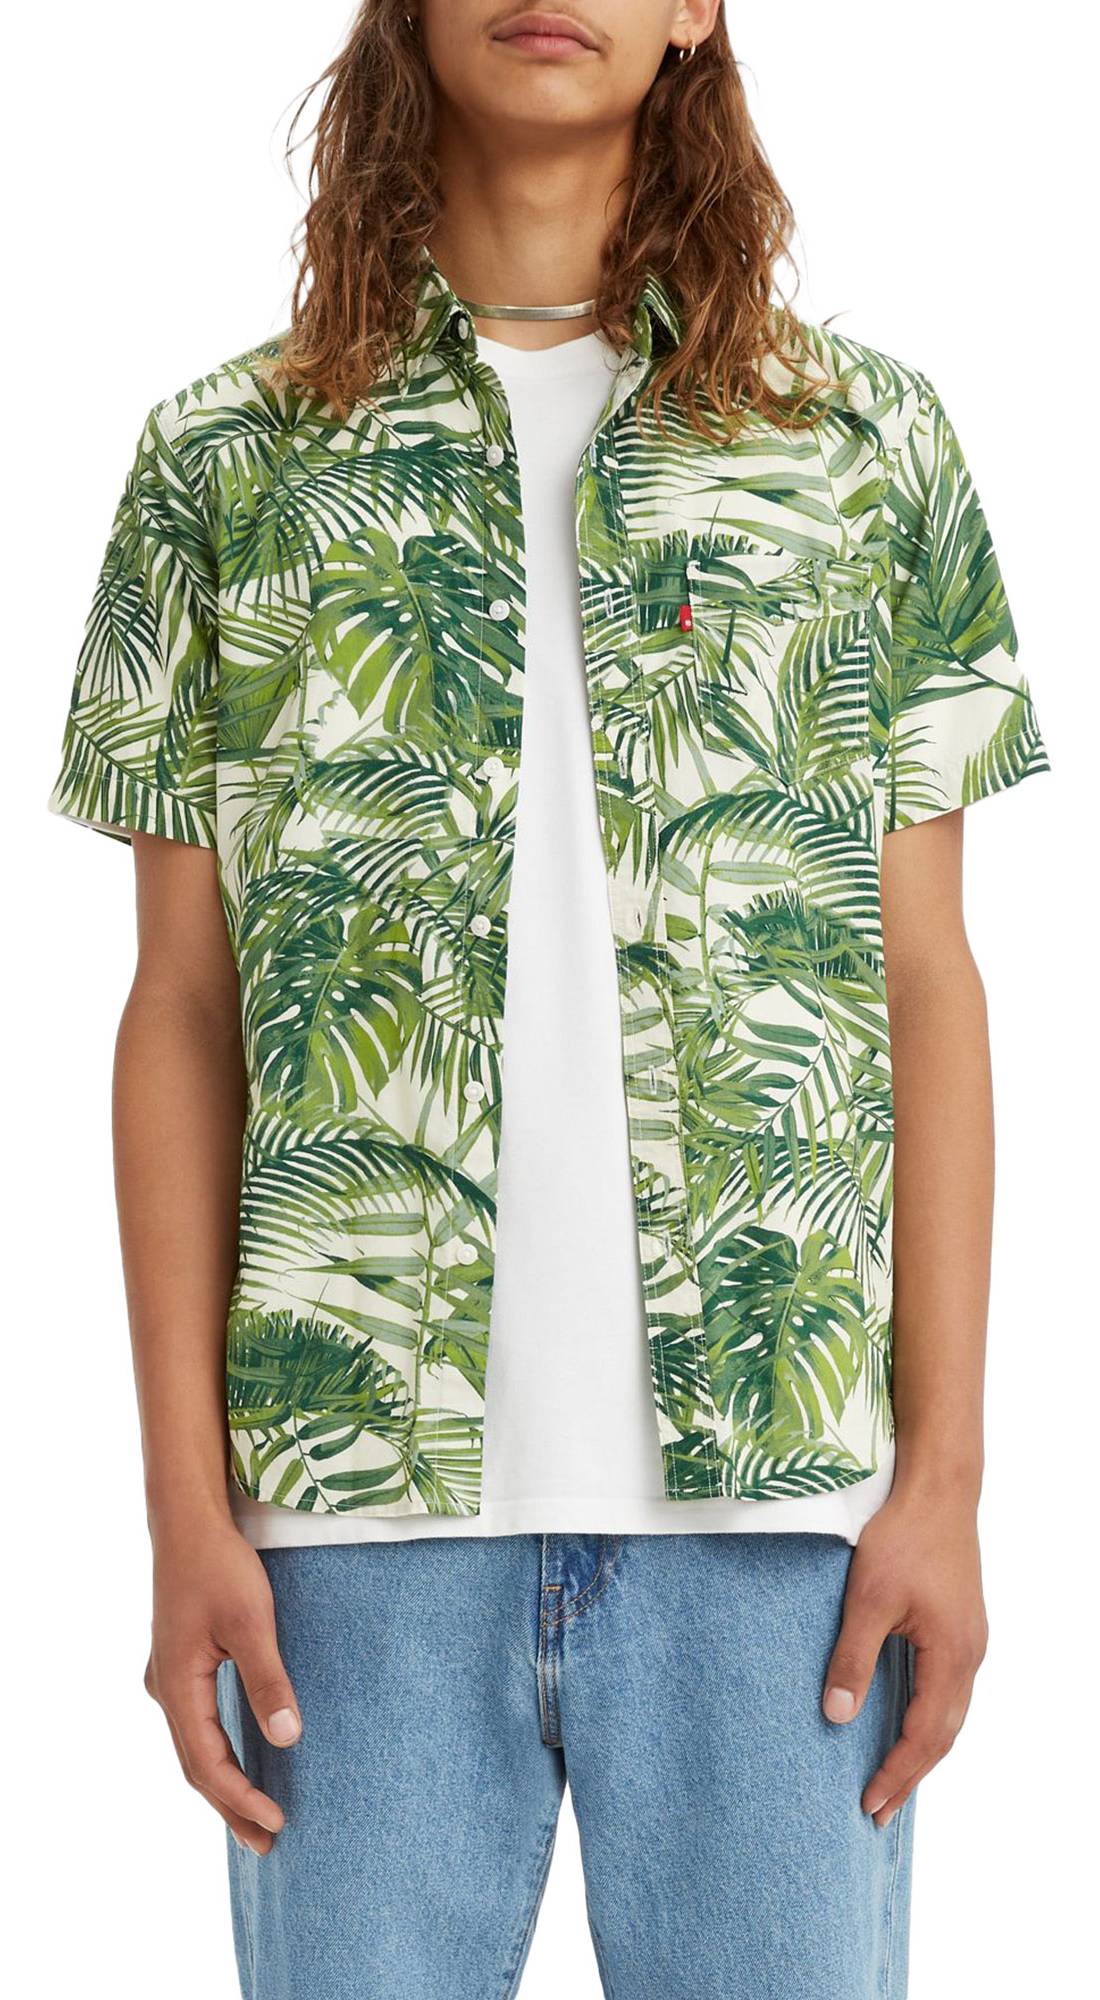 levis premium tropical fern button up shirt - 8586